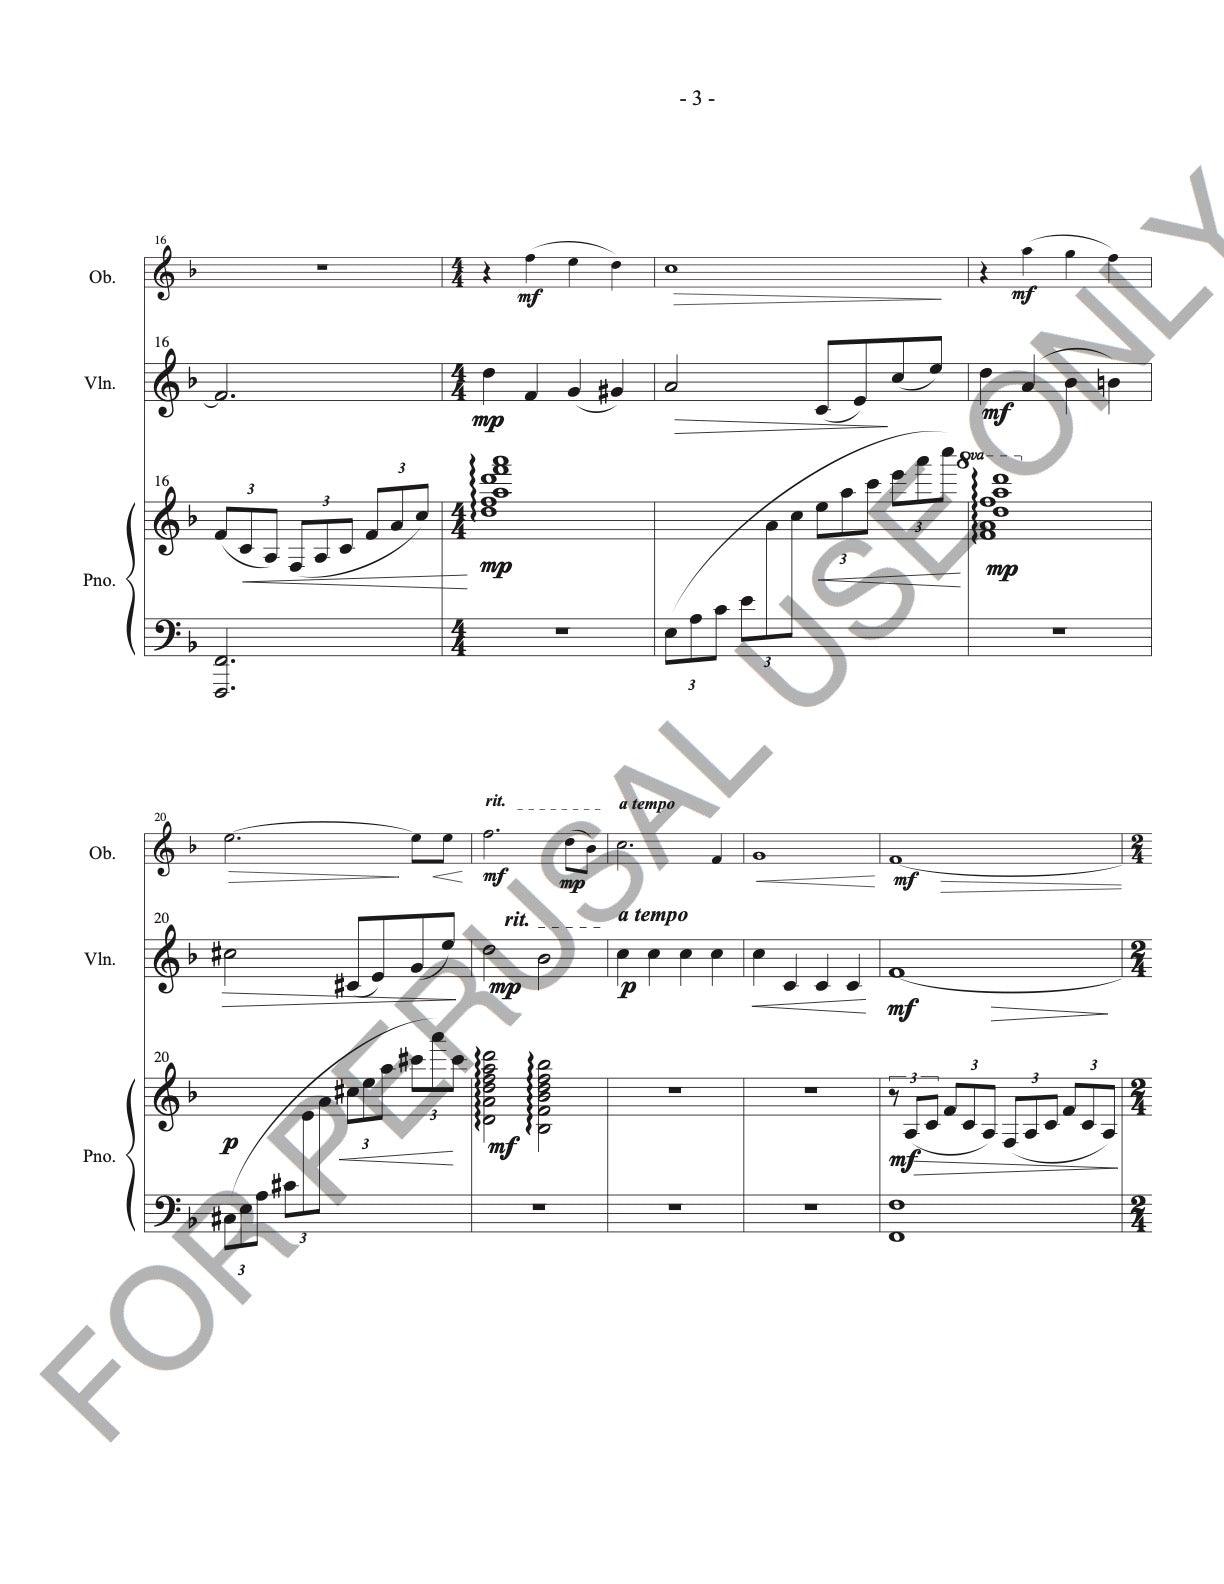 Oboe, Violin and Piano - The Lord's Prayer (score+parts) - ChaipruckMekara